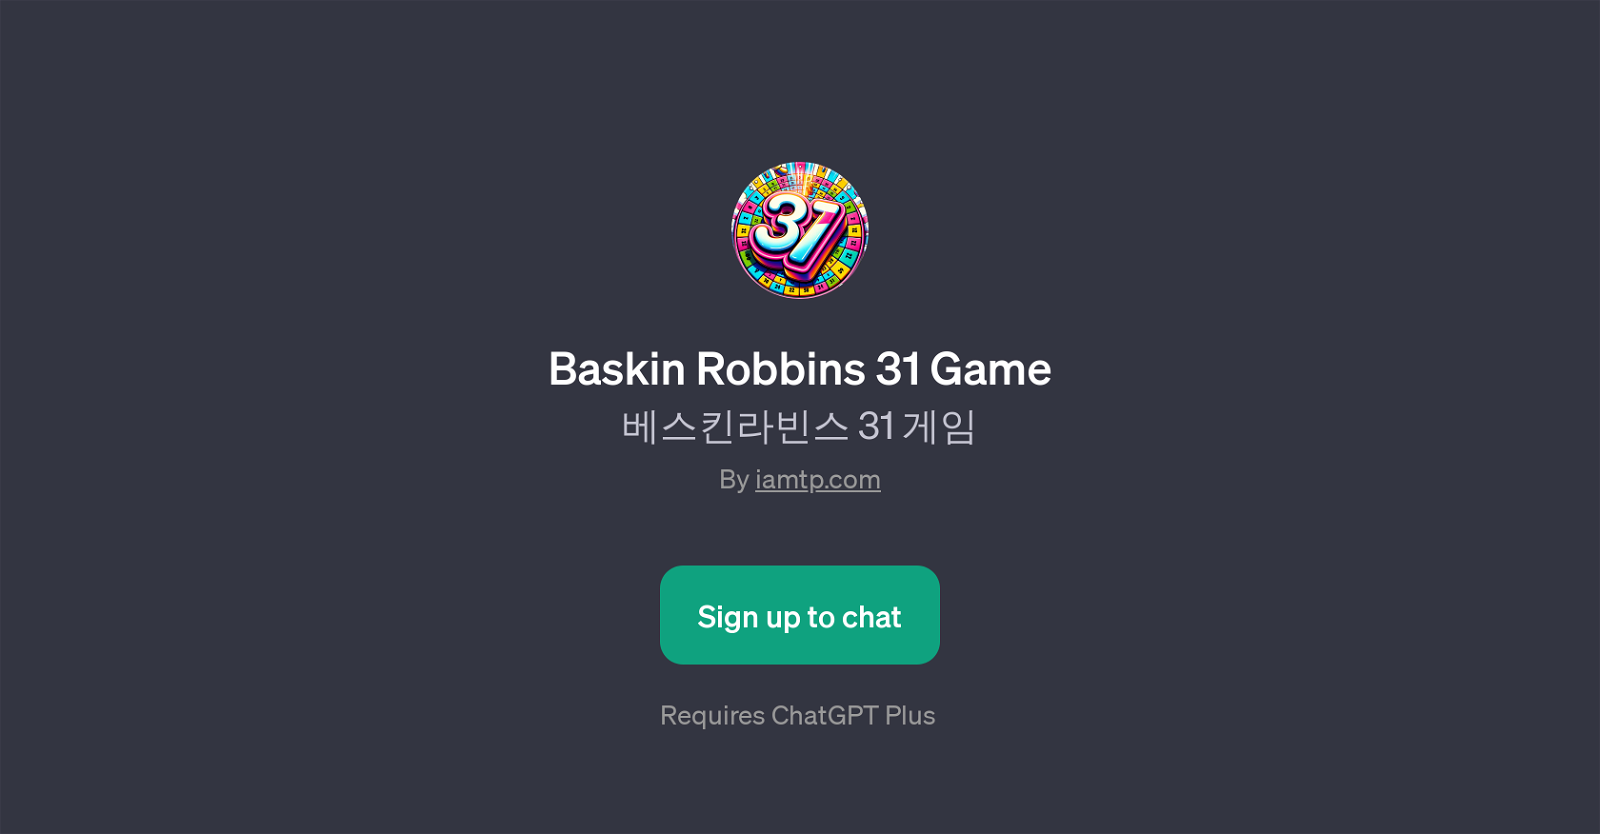 Baskin Robbins 31 Game website